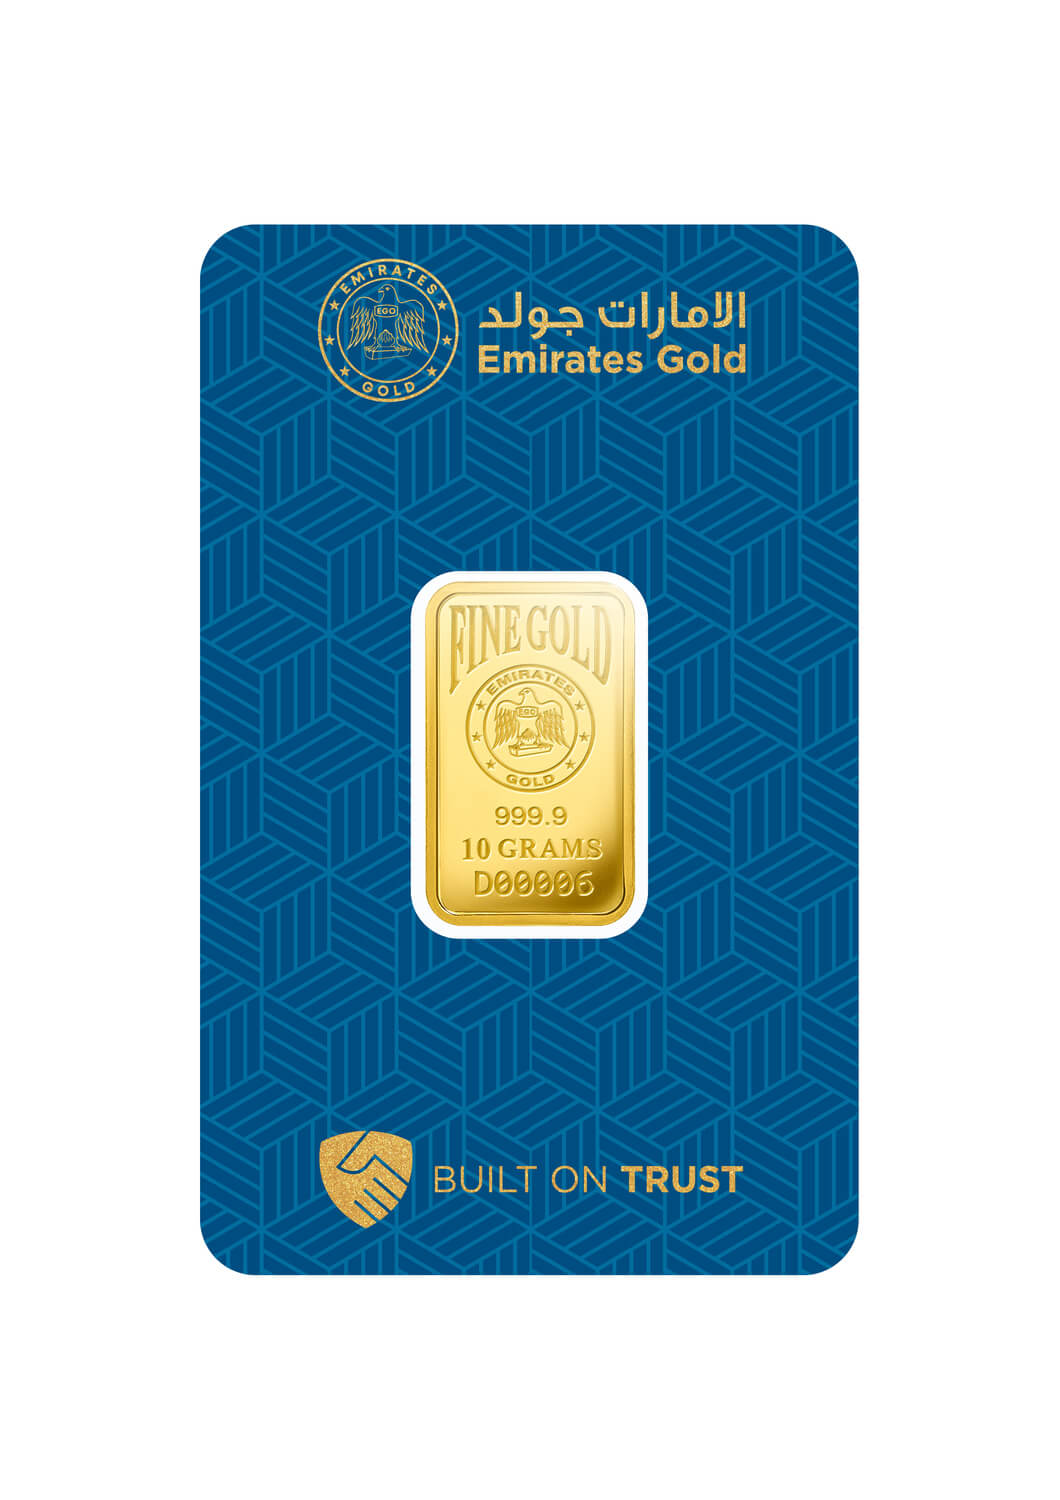 Emirates Gold 10g Gold Bar Fine Gold 999.9 Purity - 10 Grams - Saleh Sallom